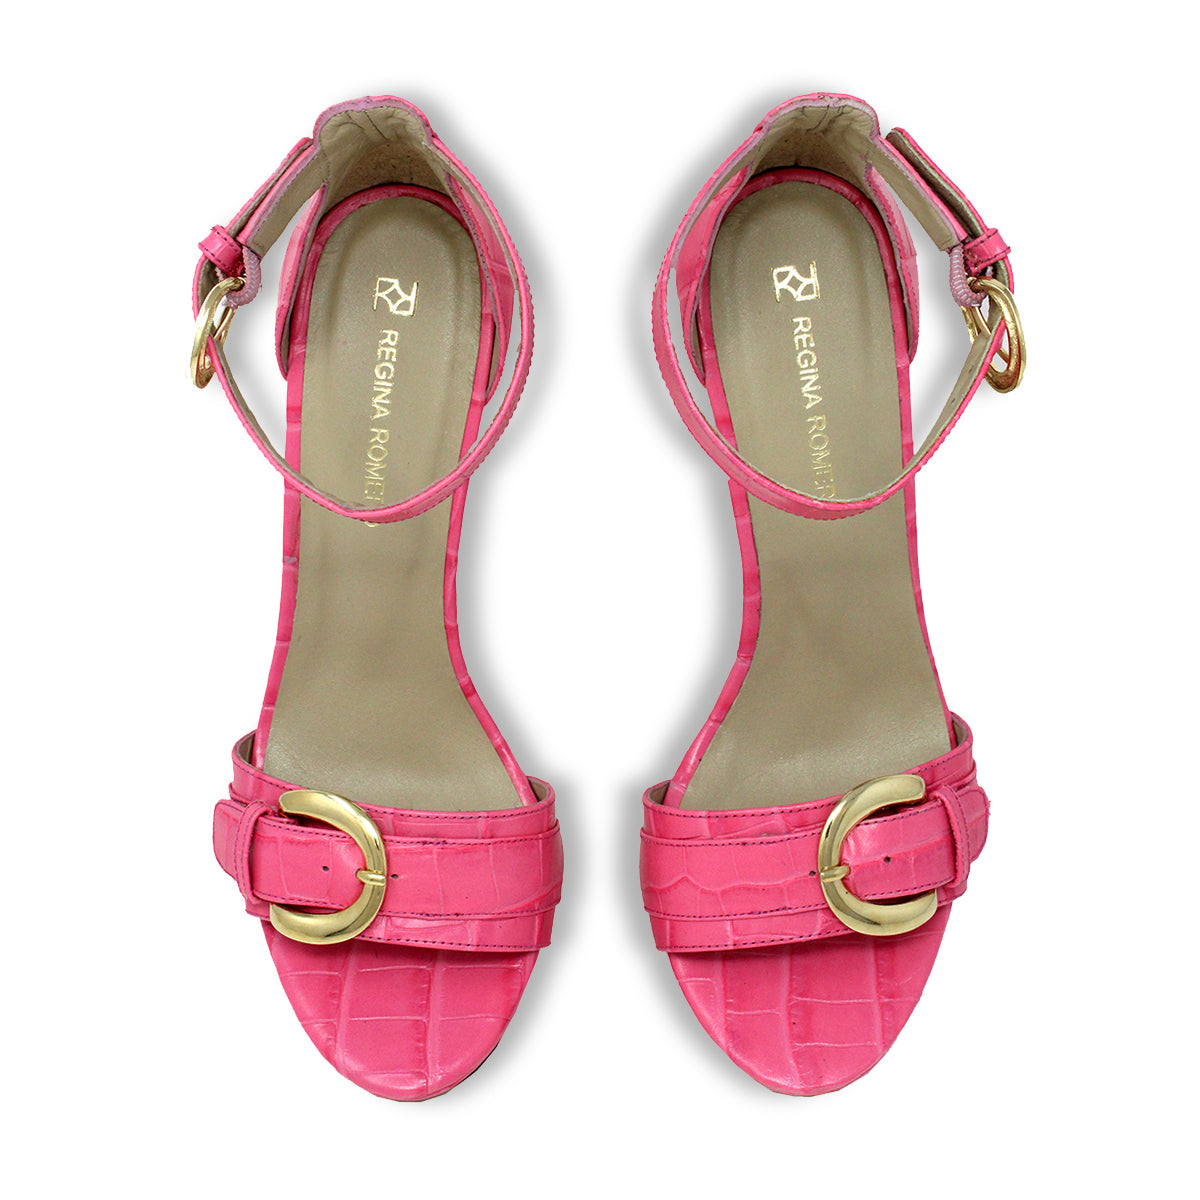 TROPEZ 135 - Rosa Regina Romero High Heel Platform Sandal Shoe for Women in Leather